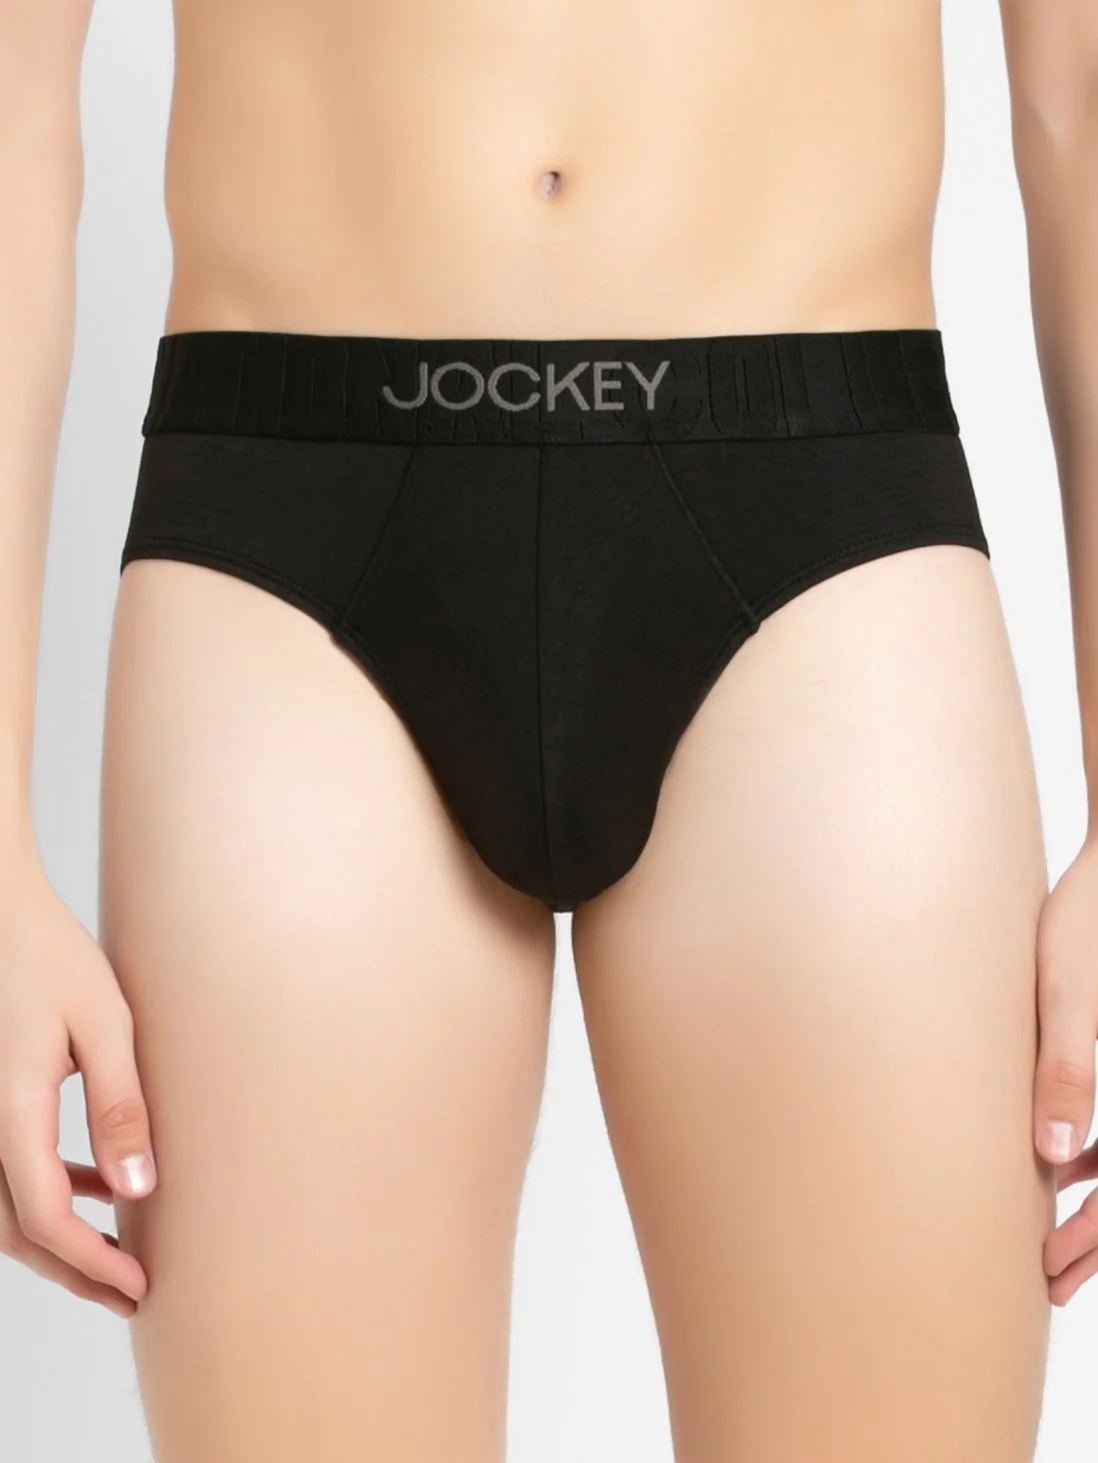 Jockey underwear sale – Lachic Innerwear and Cosmetics